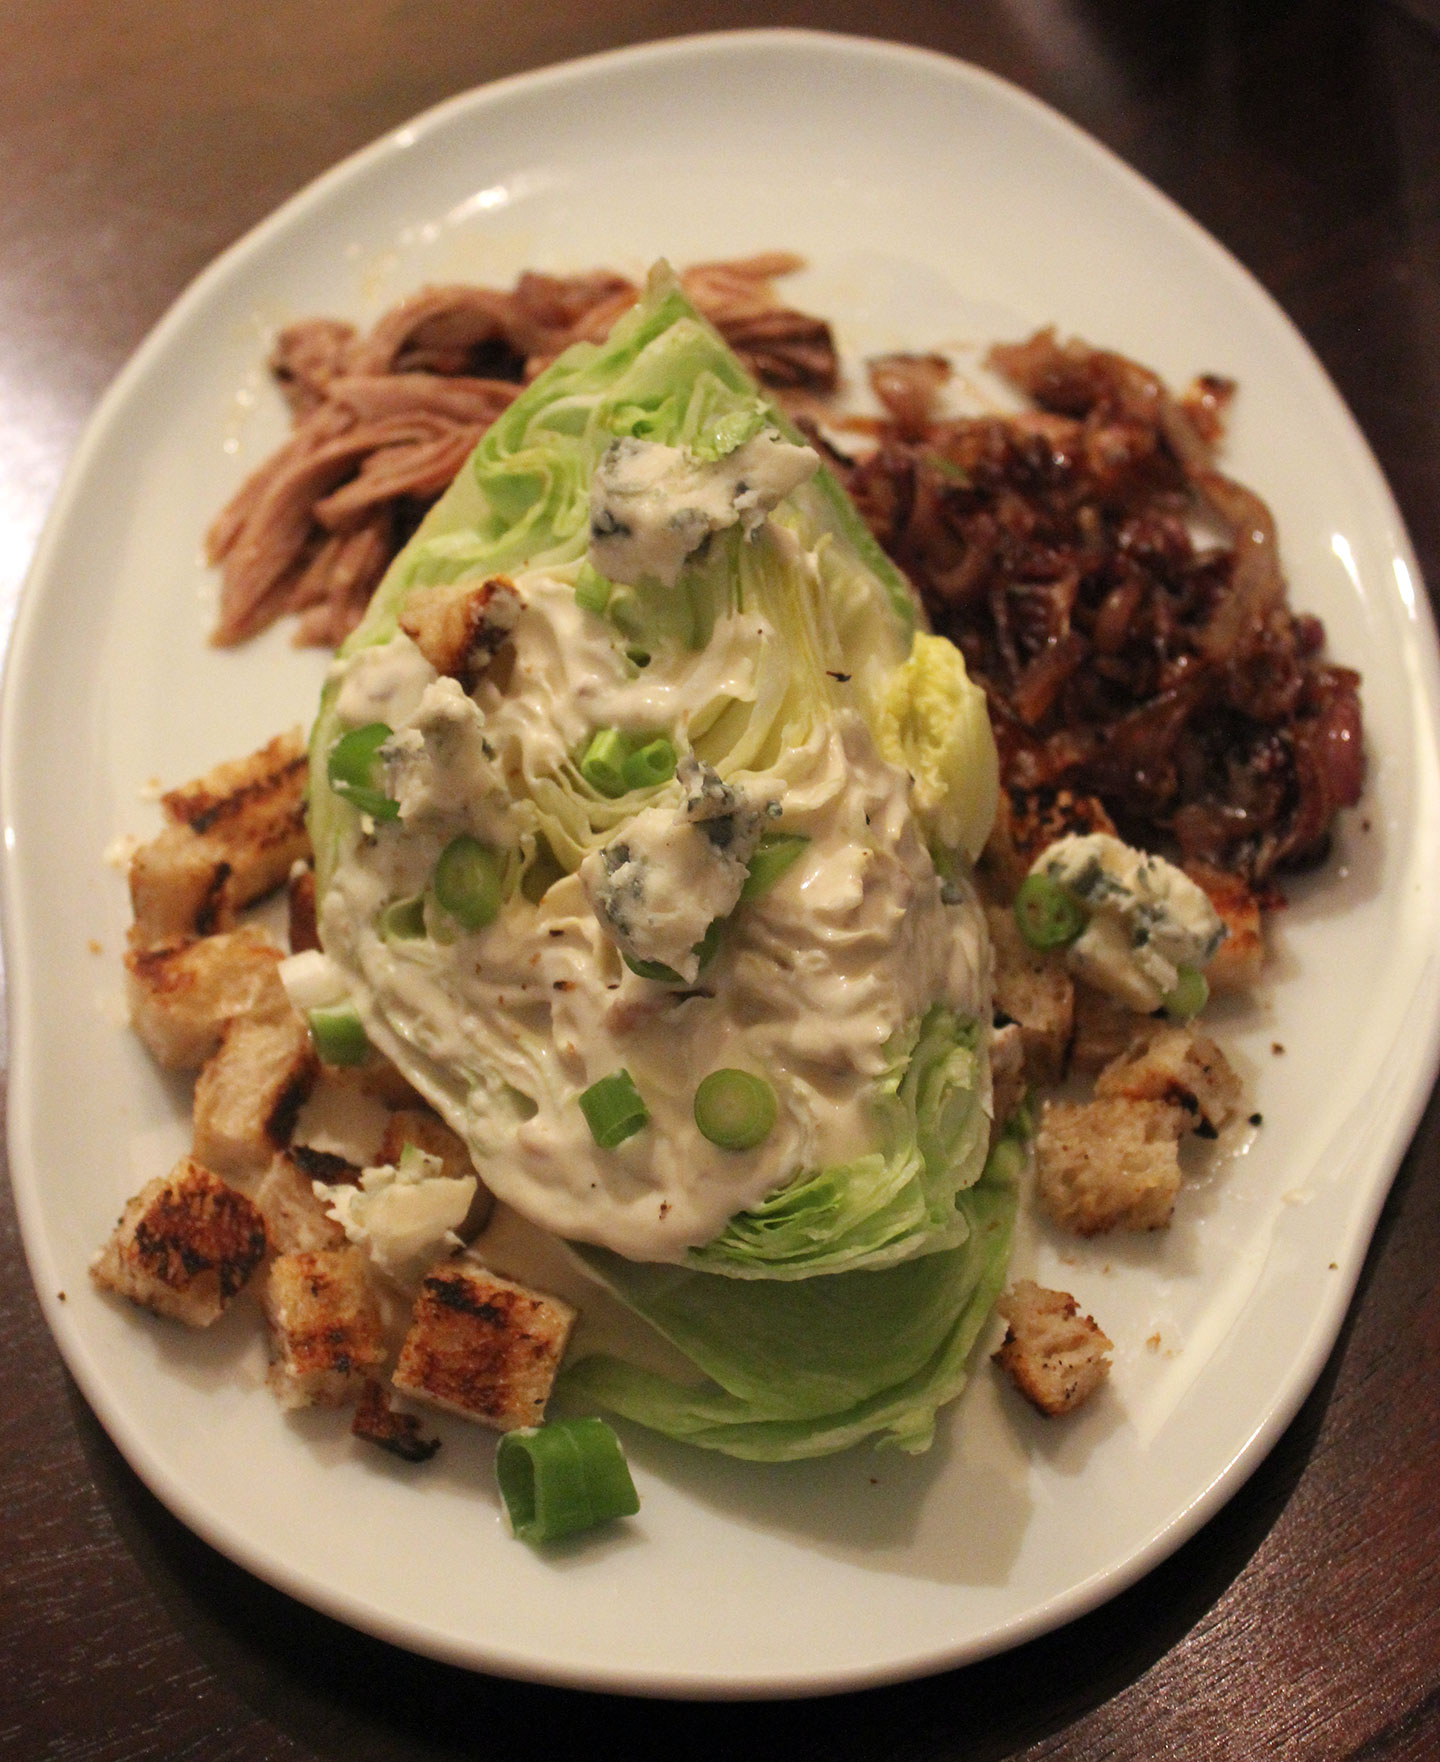 TBT Recipe: Iceberg Salad with Pulled Pork